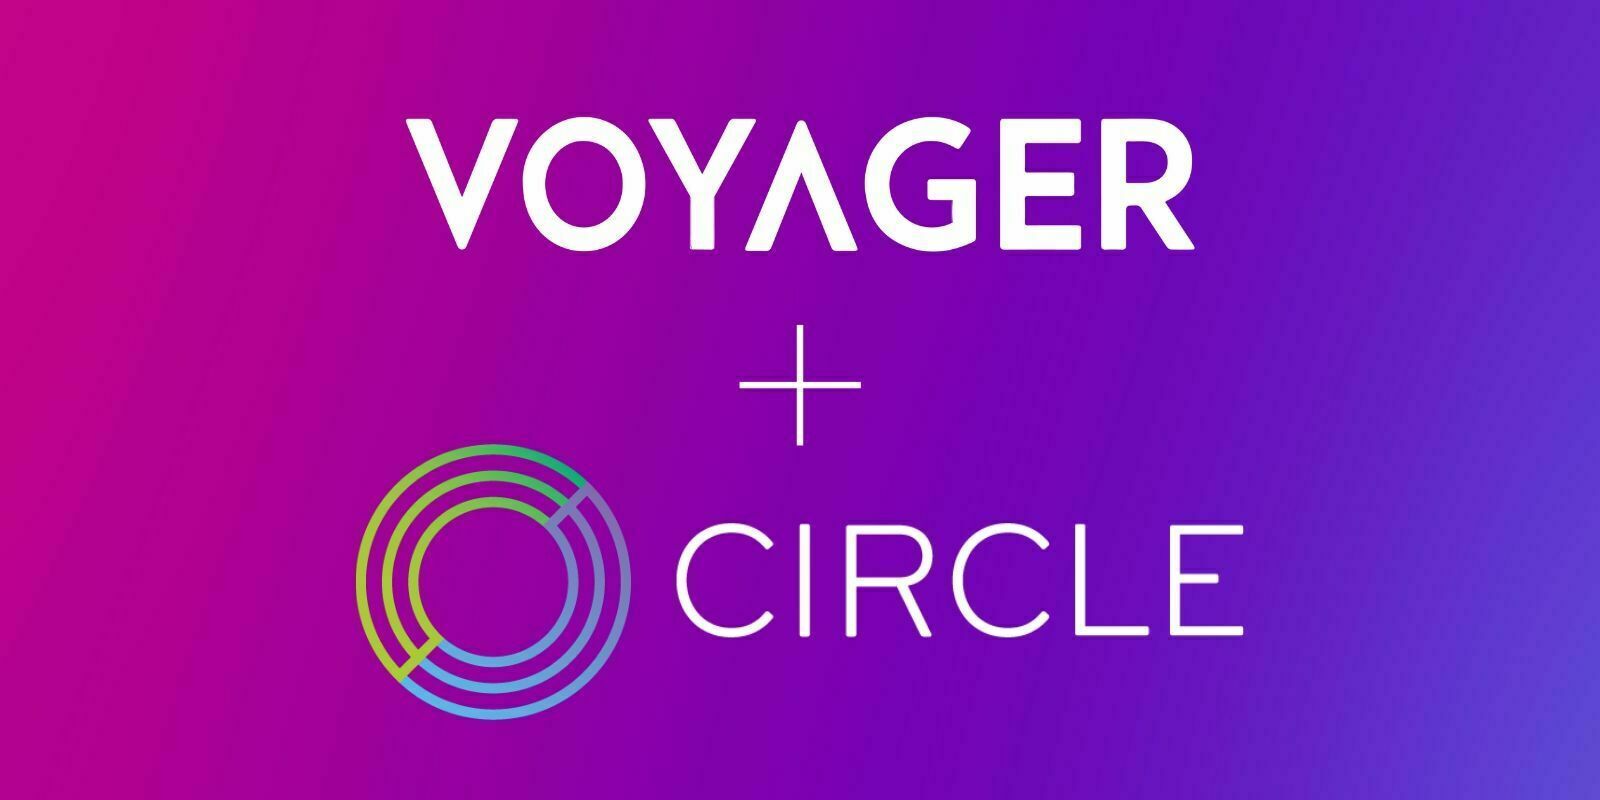 Voyager Digital acquiert l'application de crypto-investissement Circle Invest